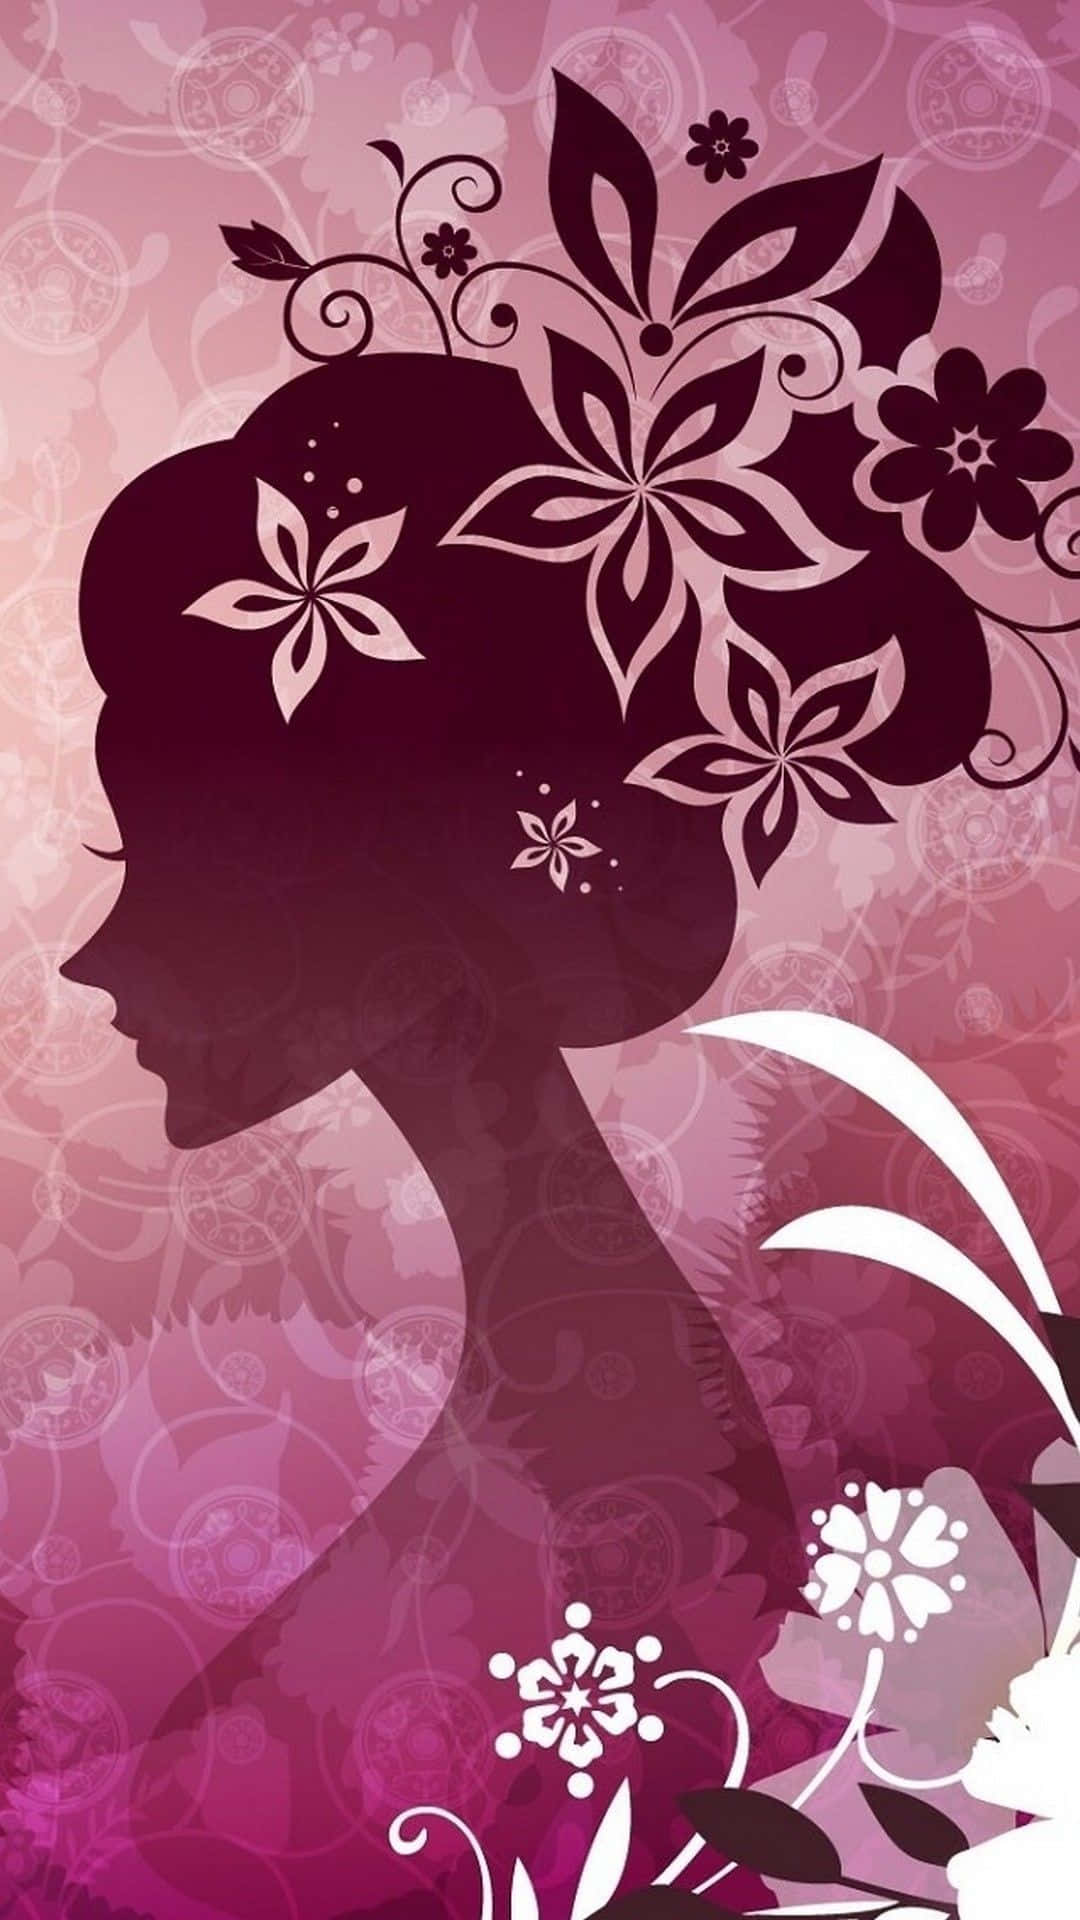 Free Beautiful Girly Wallpaper Downloads, [100+] Beautiful Girly Wallpapers  for FREE 